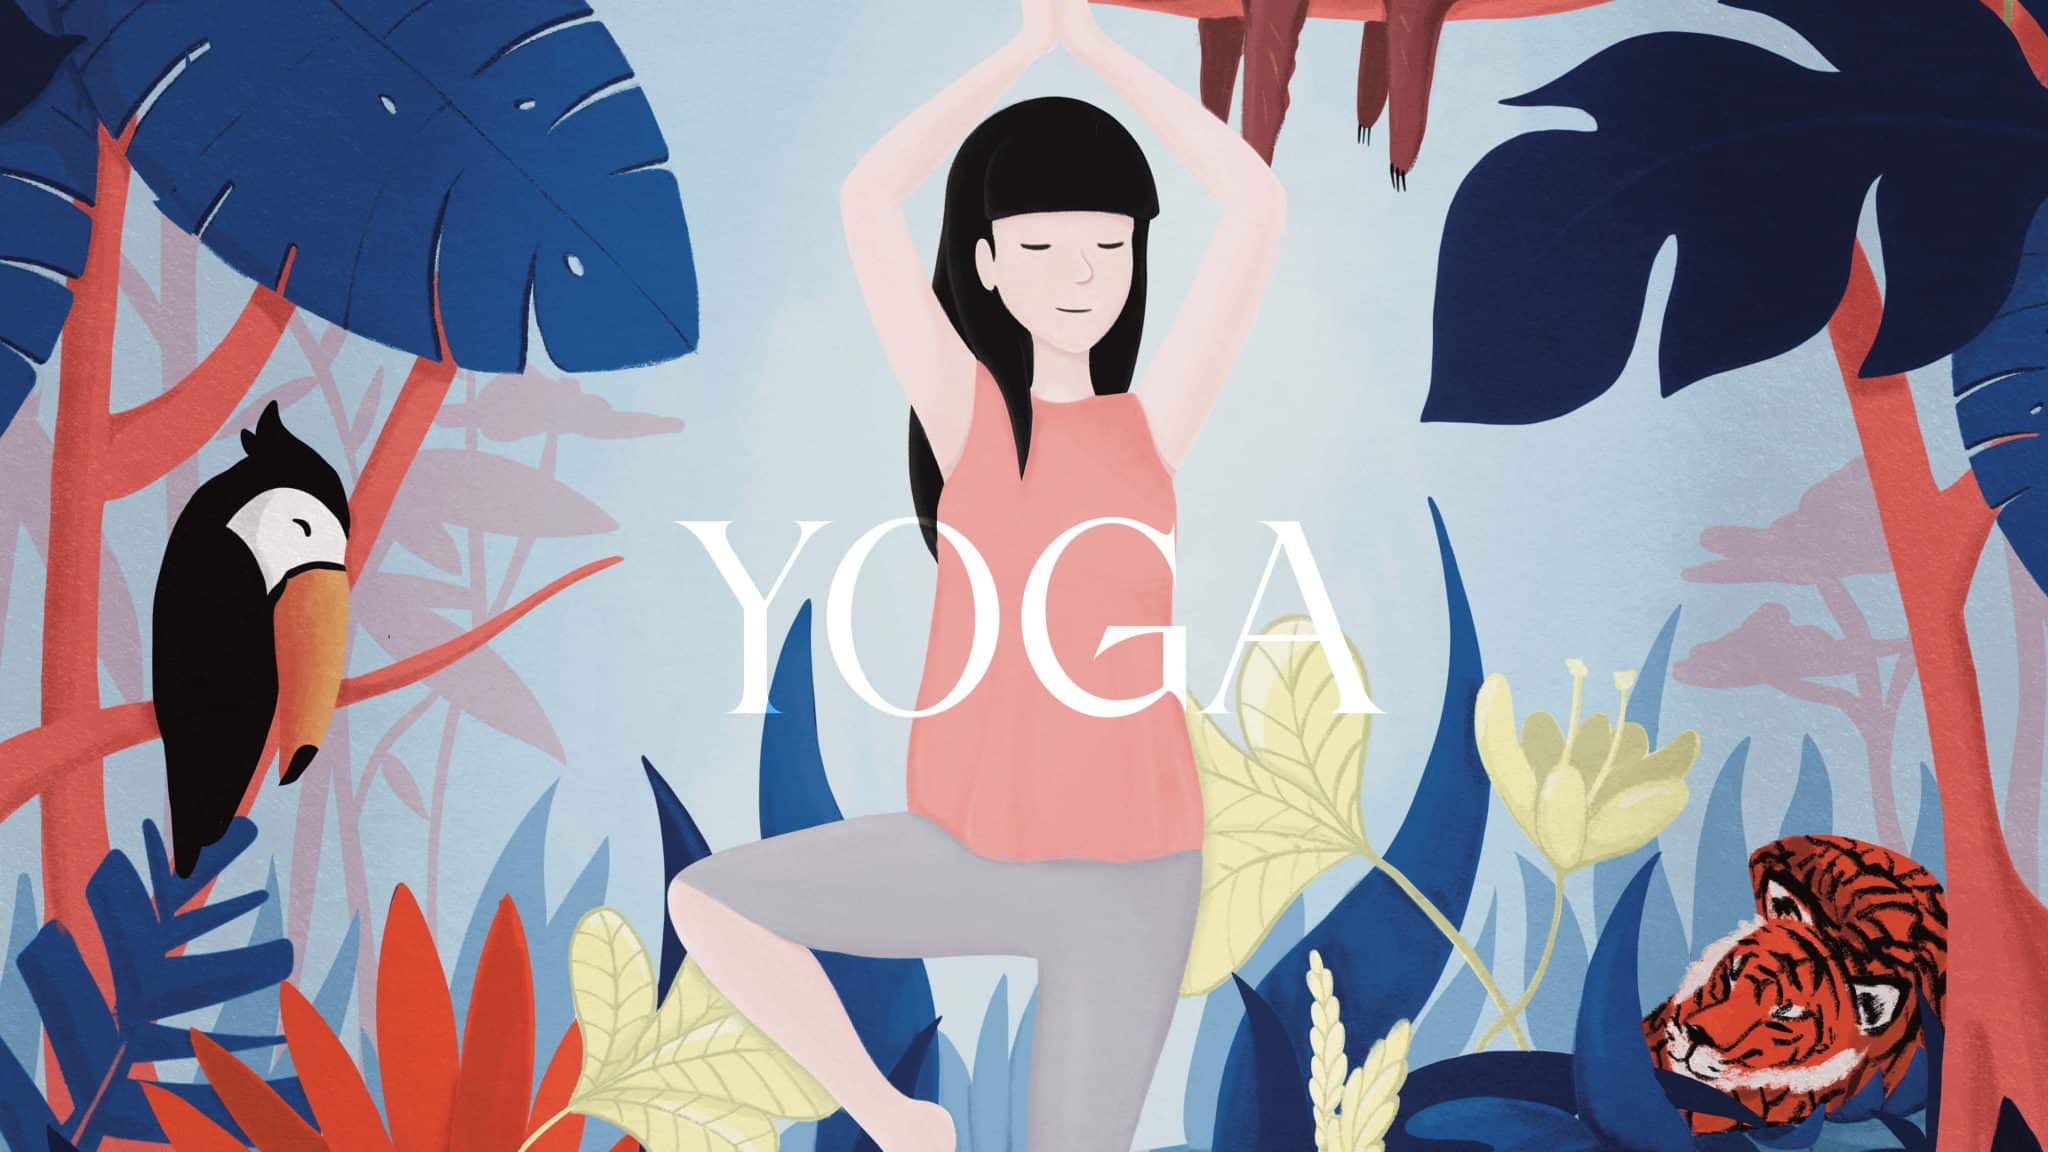 Visuel de séance de yoga